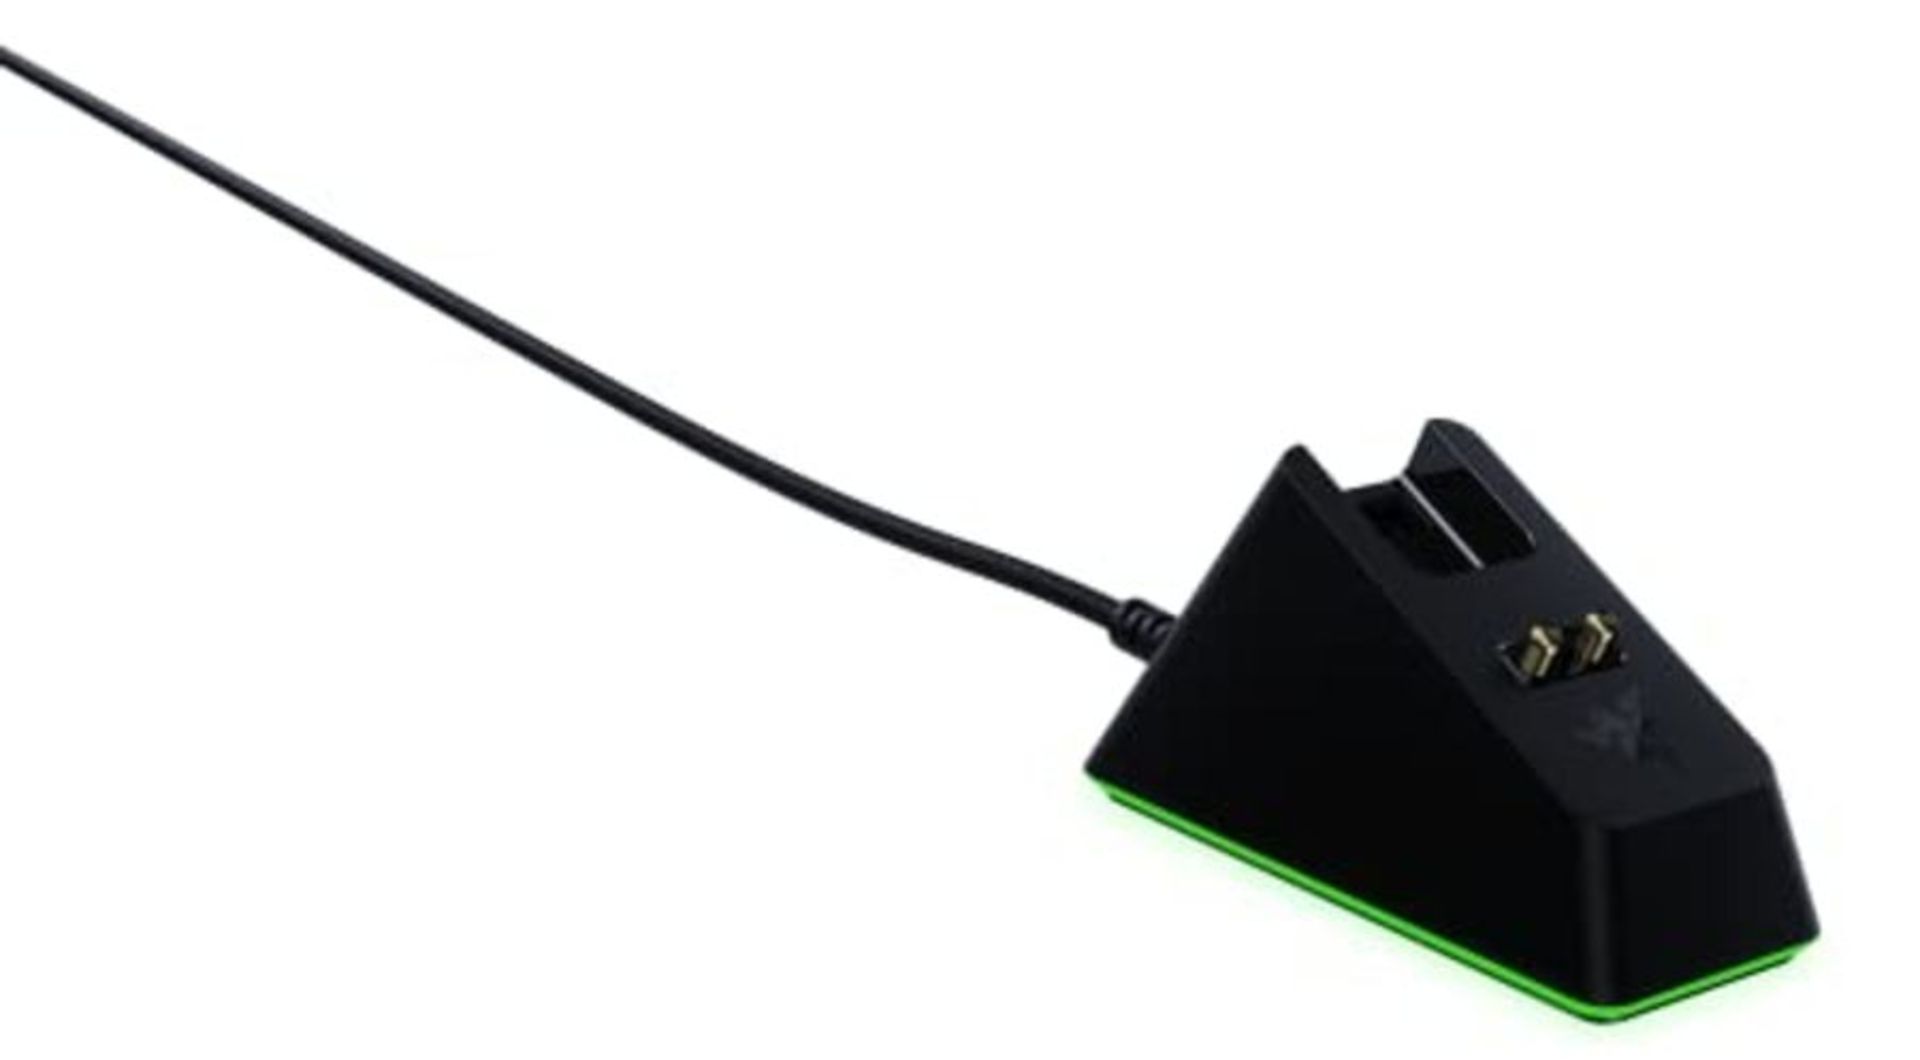 Razer Mouse Dock Chroma - Charging Station with RGB Lighting for DeathAdder V2 Pro, Vi